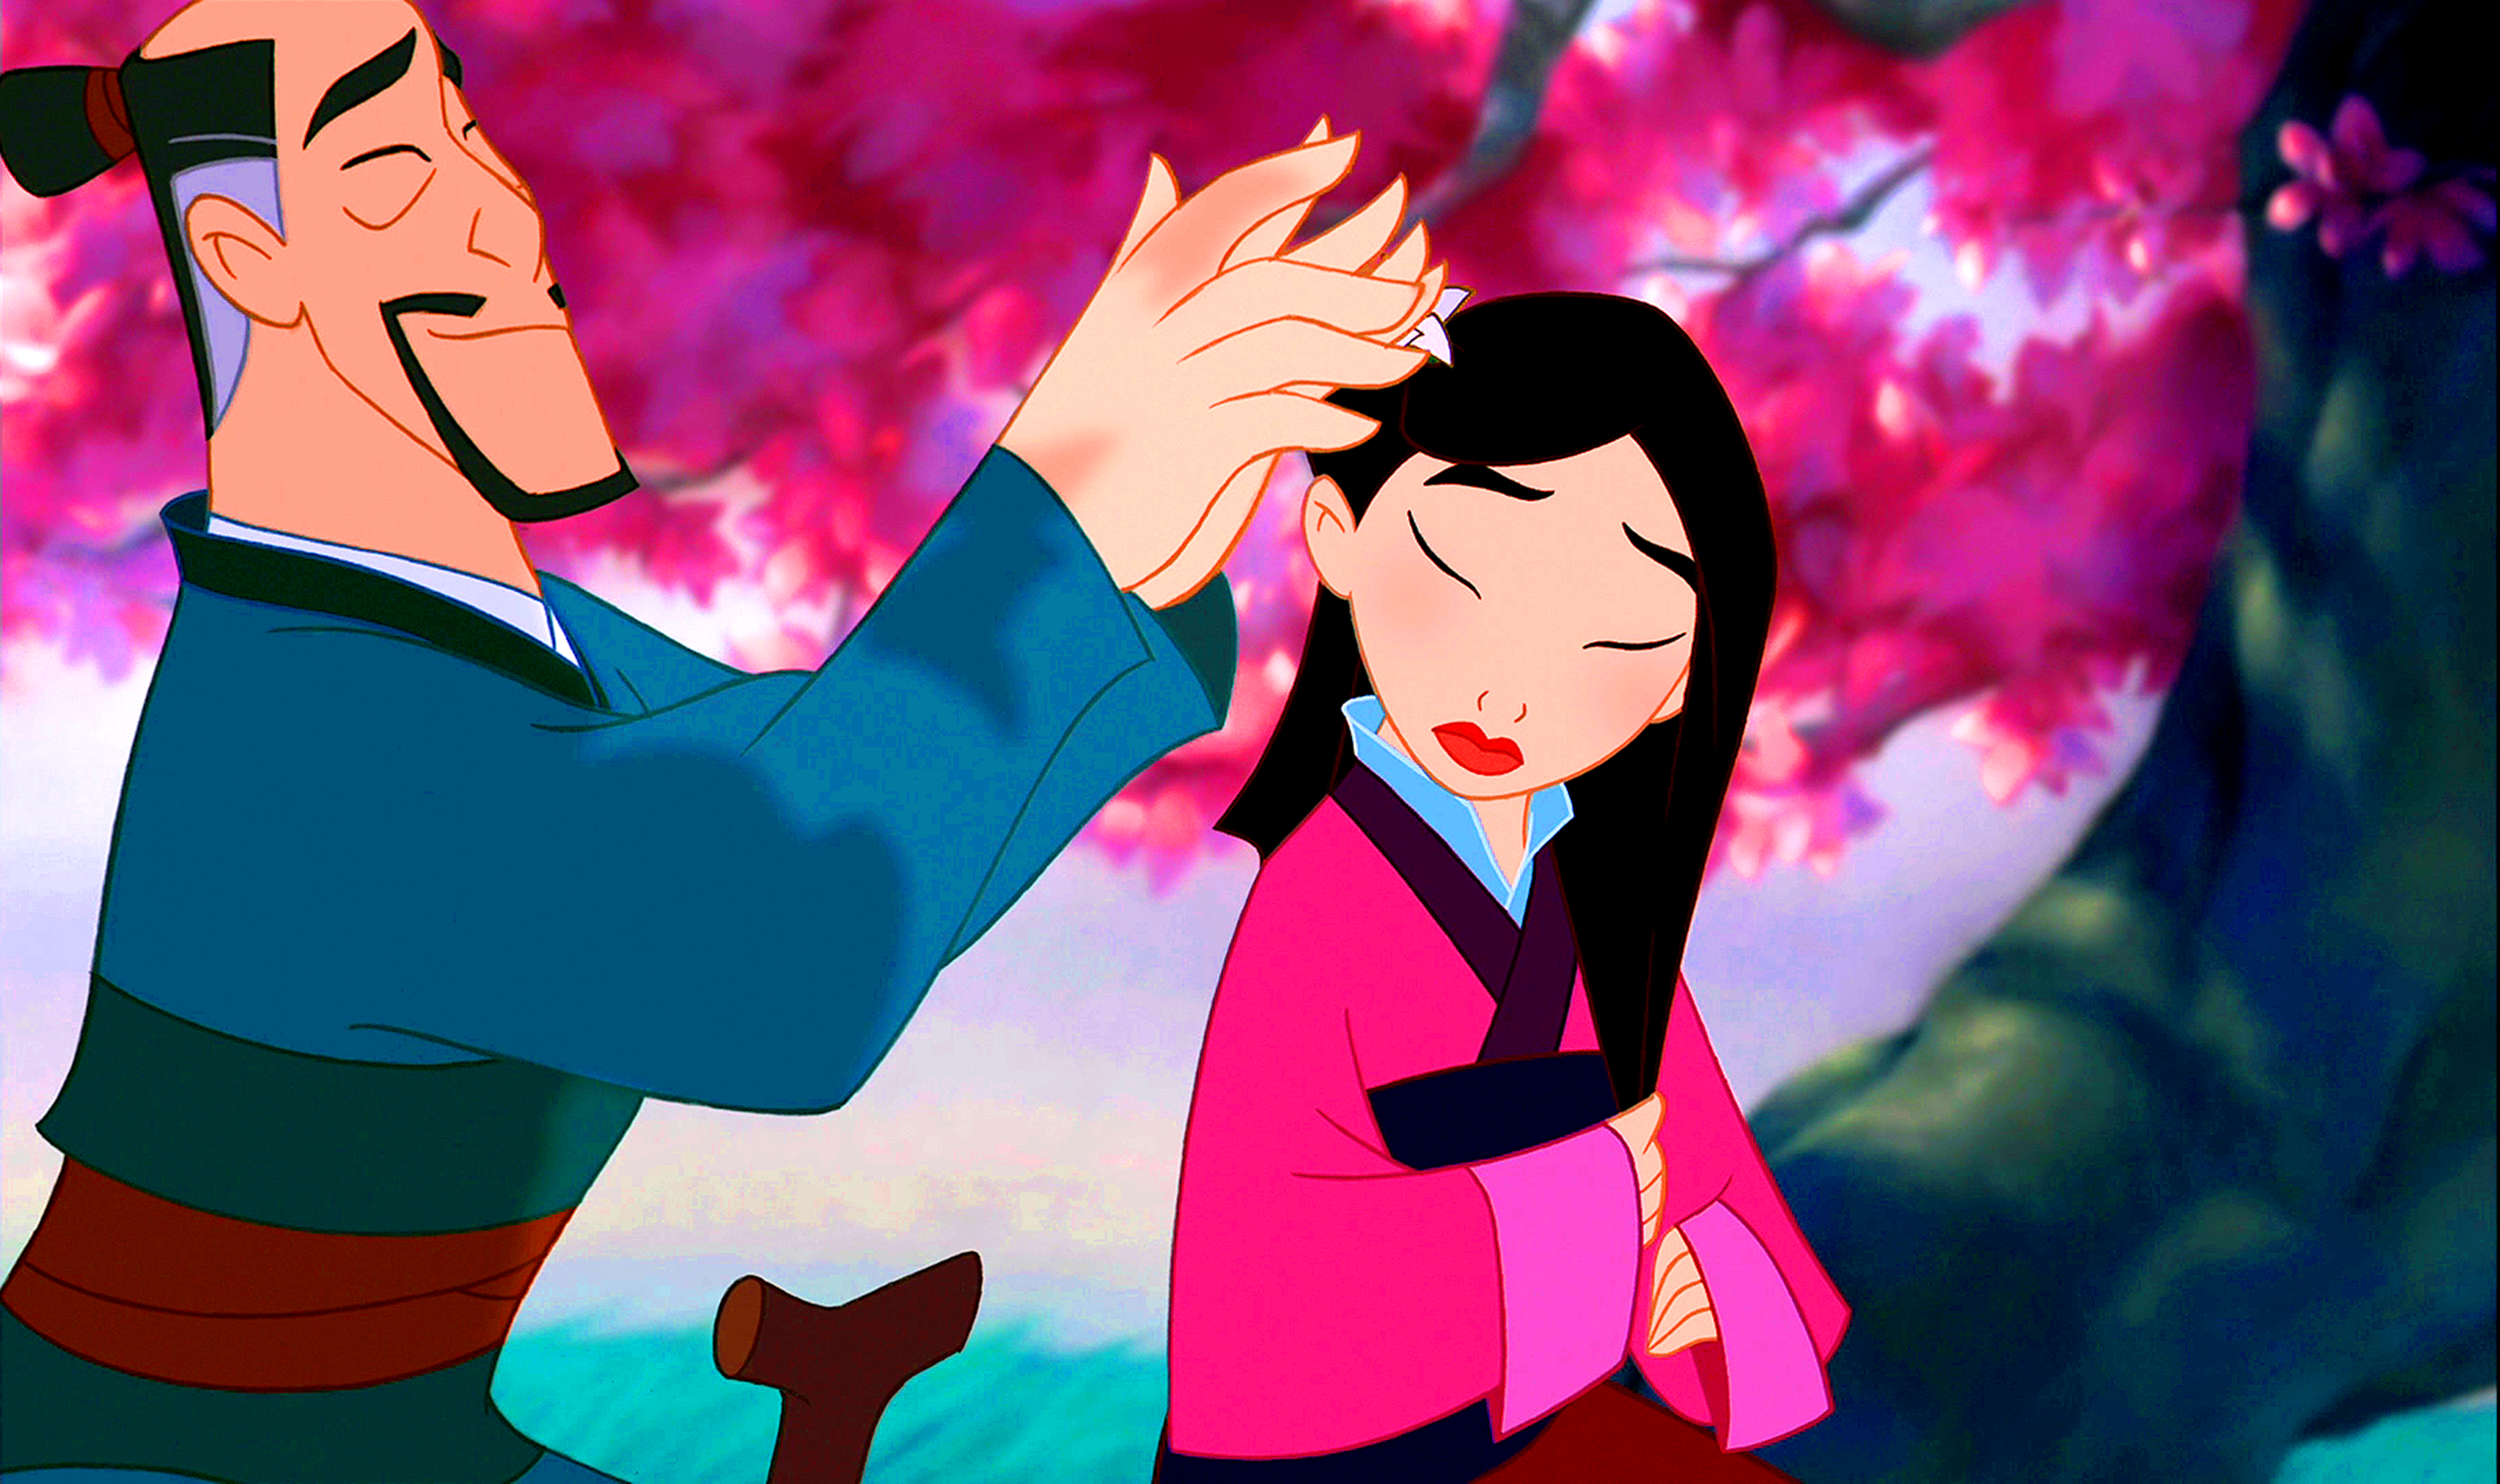 Walt disney Screencapture of Fa Zhou and Fa mulan from "Mulan" (1...